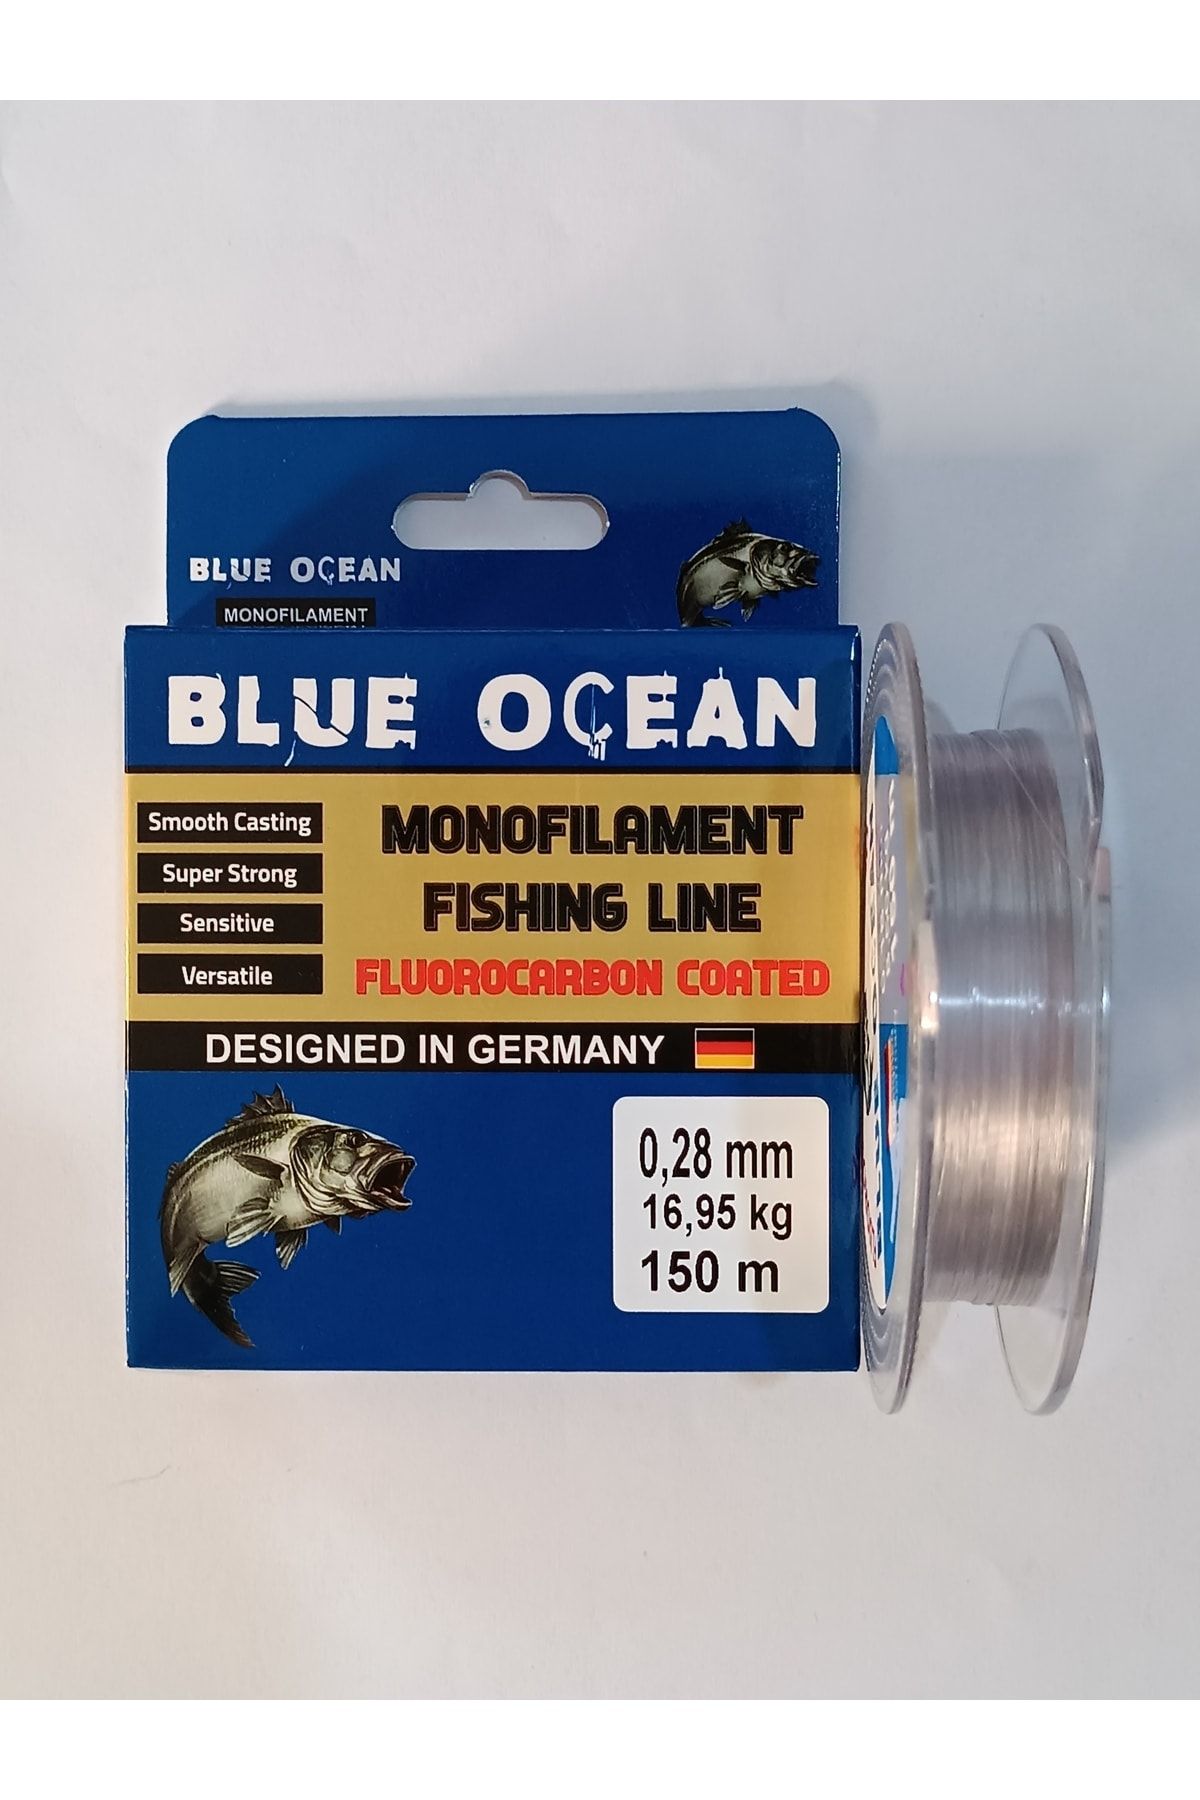 Blue Ocean Monofılament Fıshıng Lıne 150 M 0,28 Mm